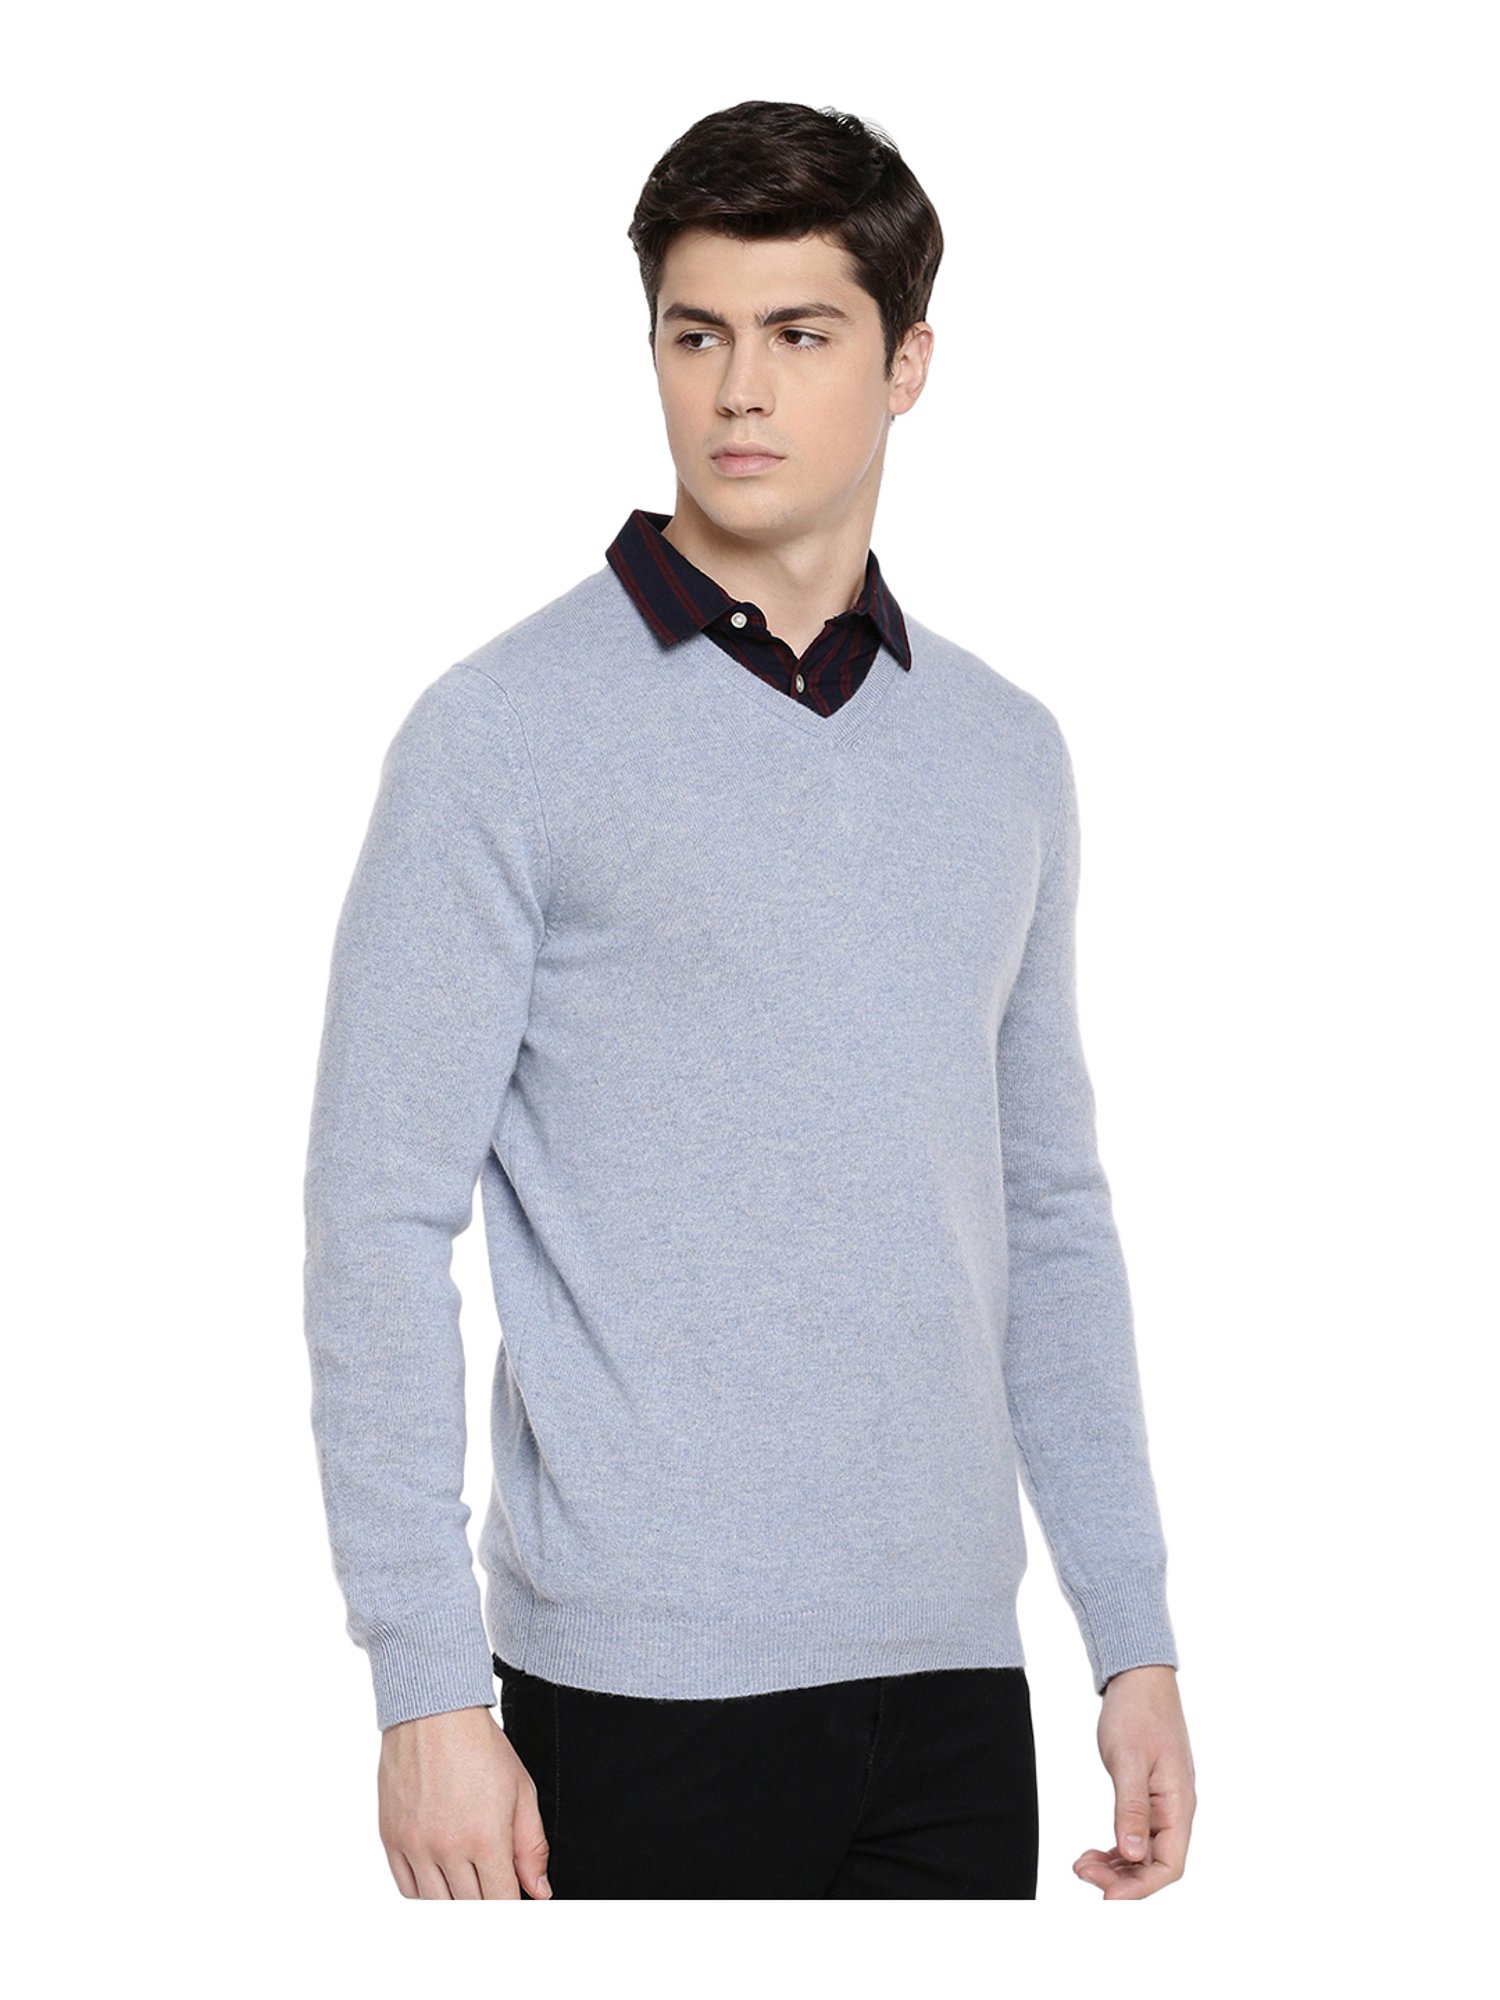 Buy > celio cashmere sweater > in stock